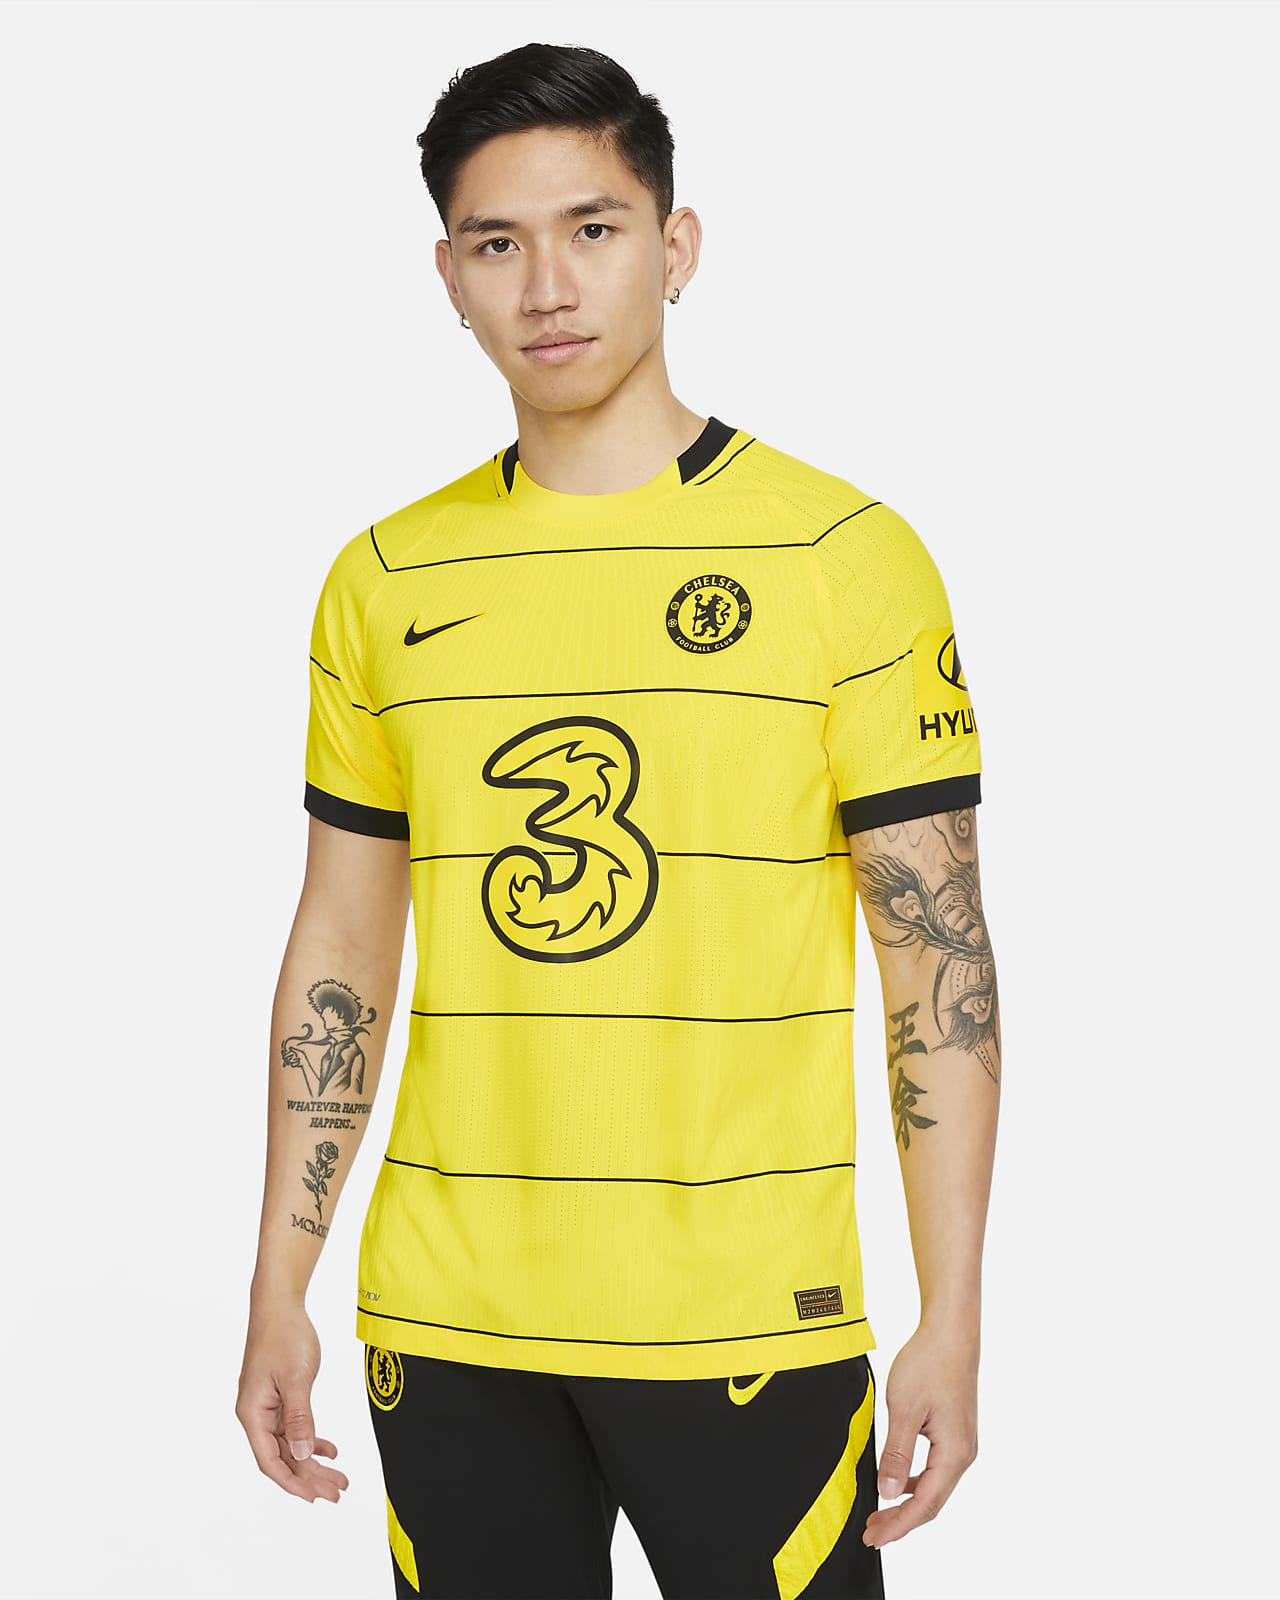 Chelsea 2021-22 Nike Away Kit | 21/22 Kits | Football shirt blog